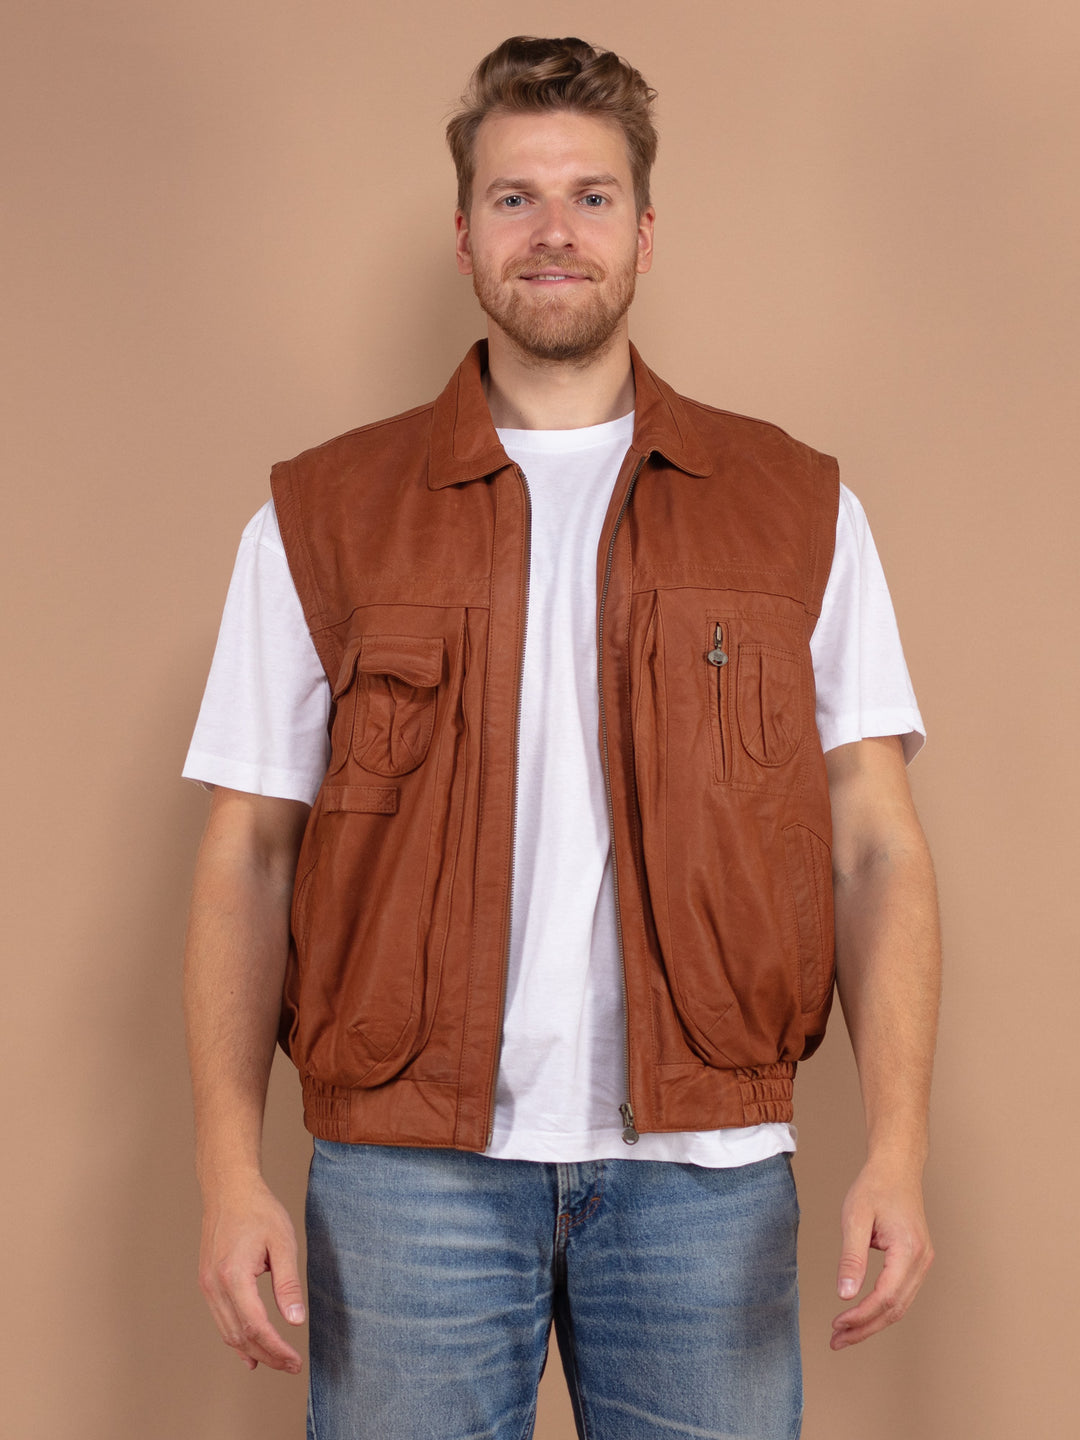 Men Leather Vest, 80's Large Size Vintage Vest, 80's Retro Vest, Vintage Sleeveless Jacket, Camping Vest, Layering Vest, Outdoor Outerwear